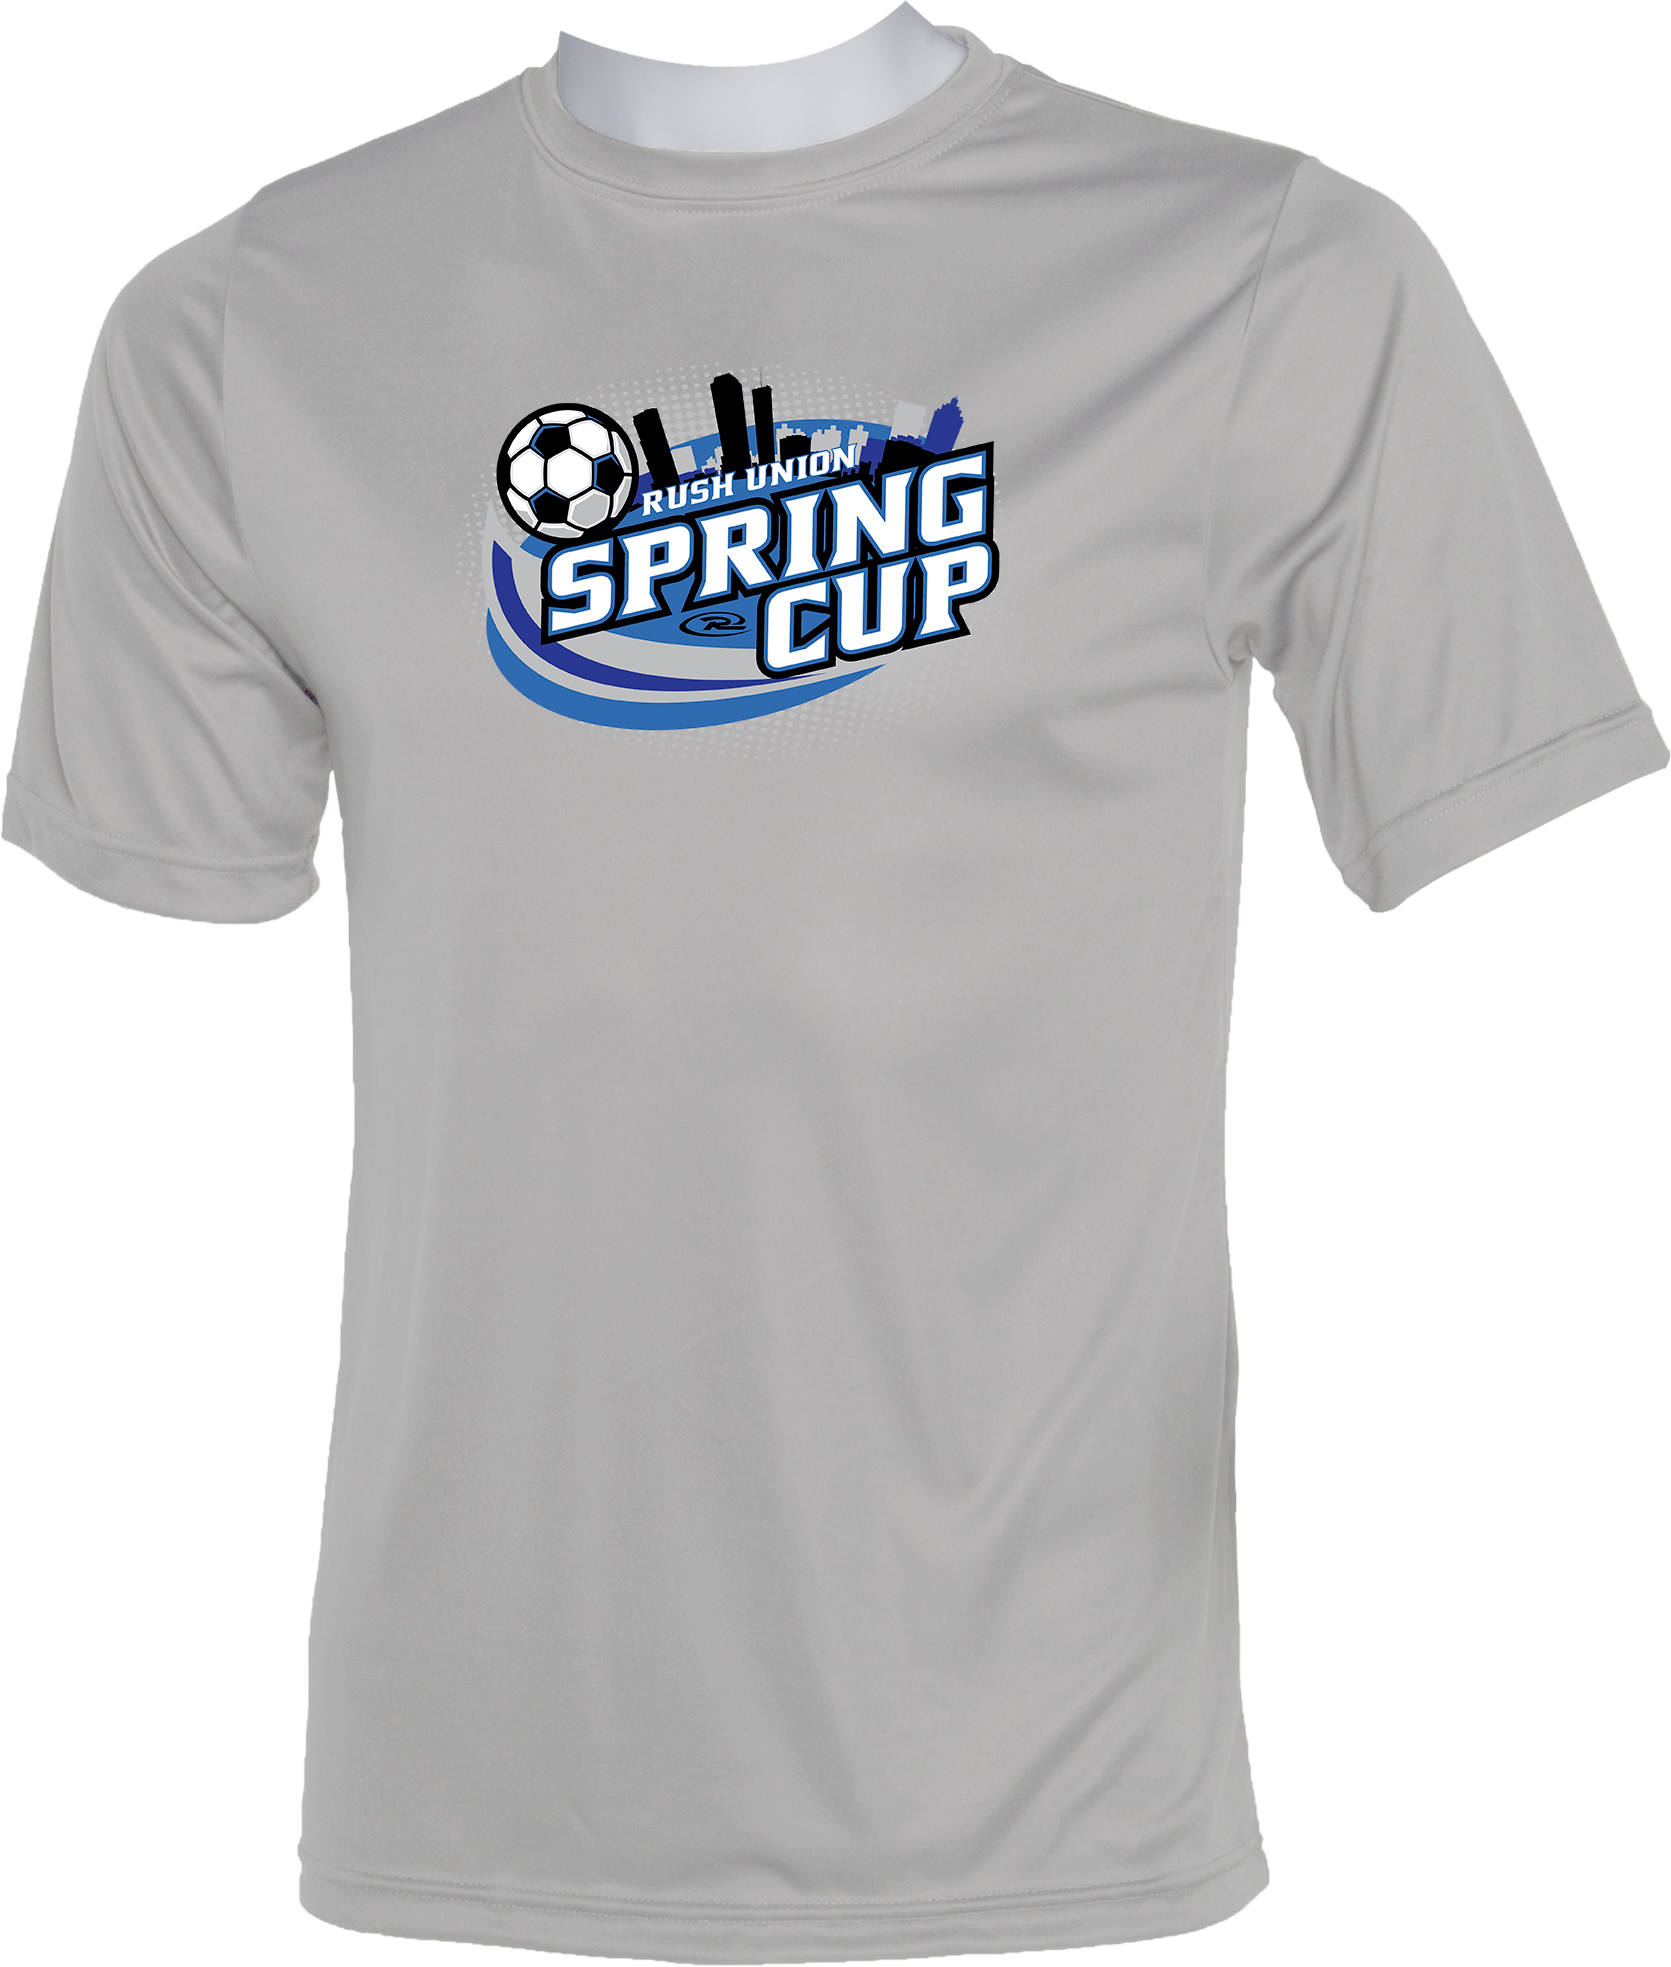 PERFORMANCE SHIRTS - 2023 Rush Union Spring Cup